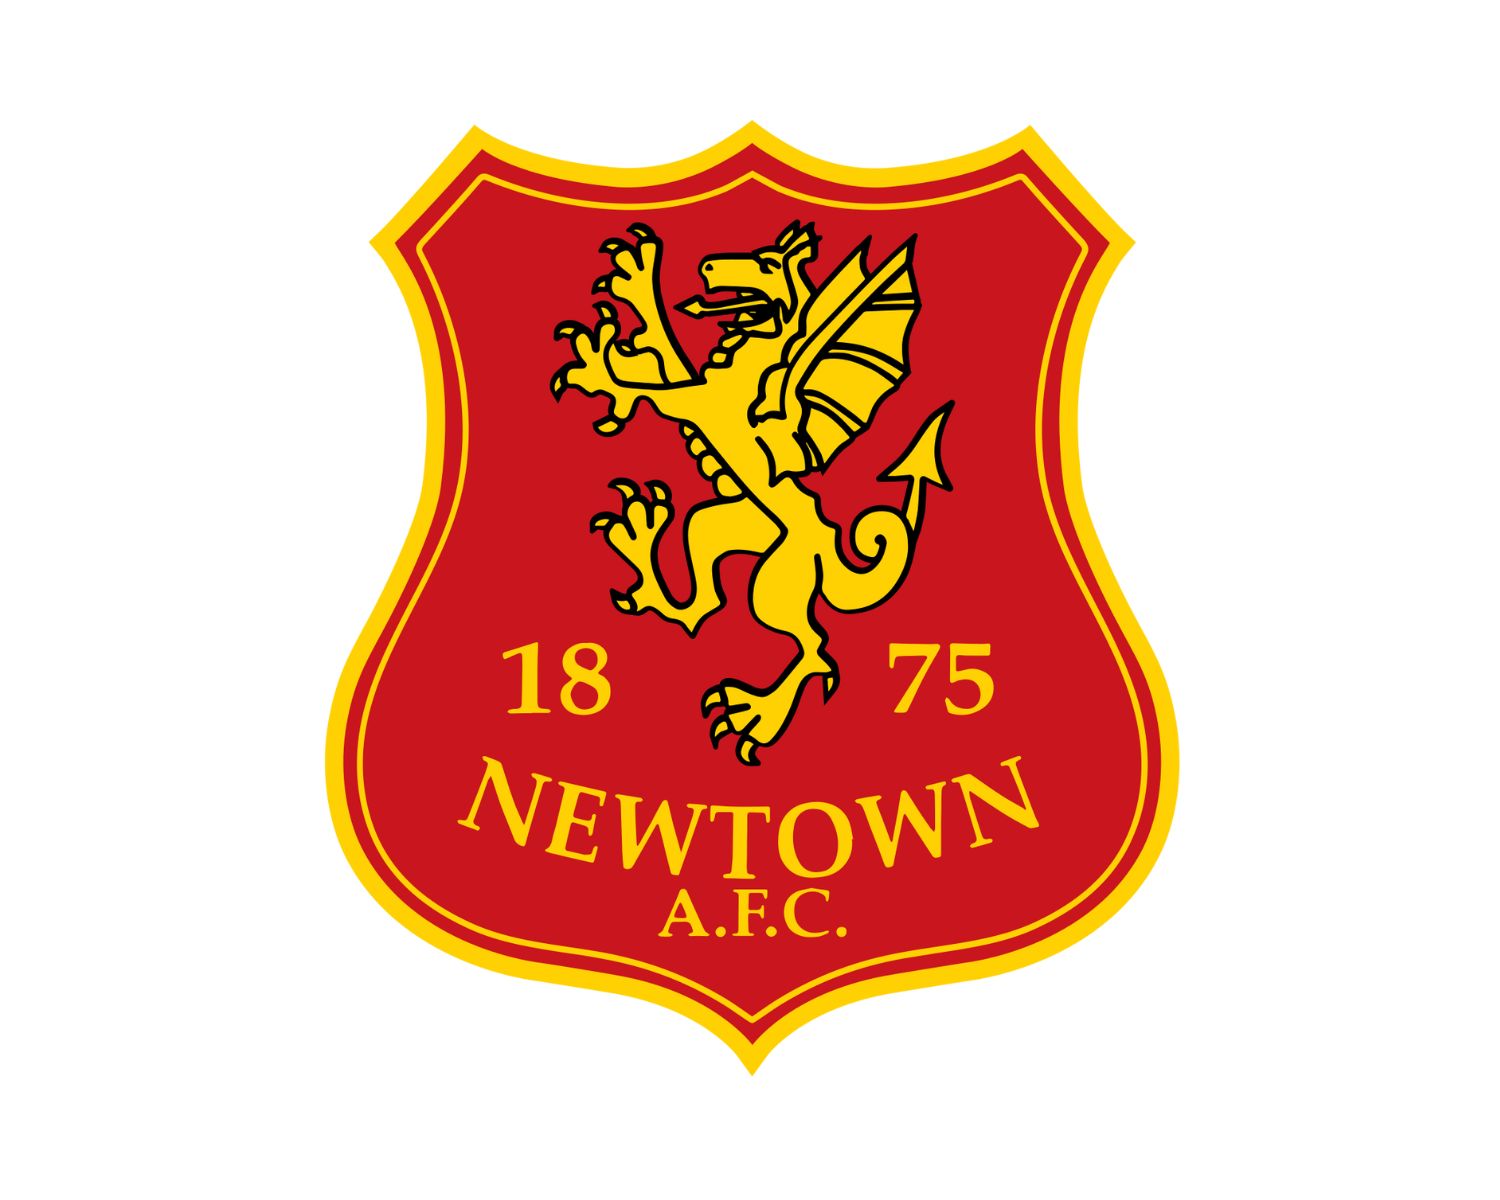 newtown-afc-23-football-club-facts